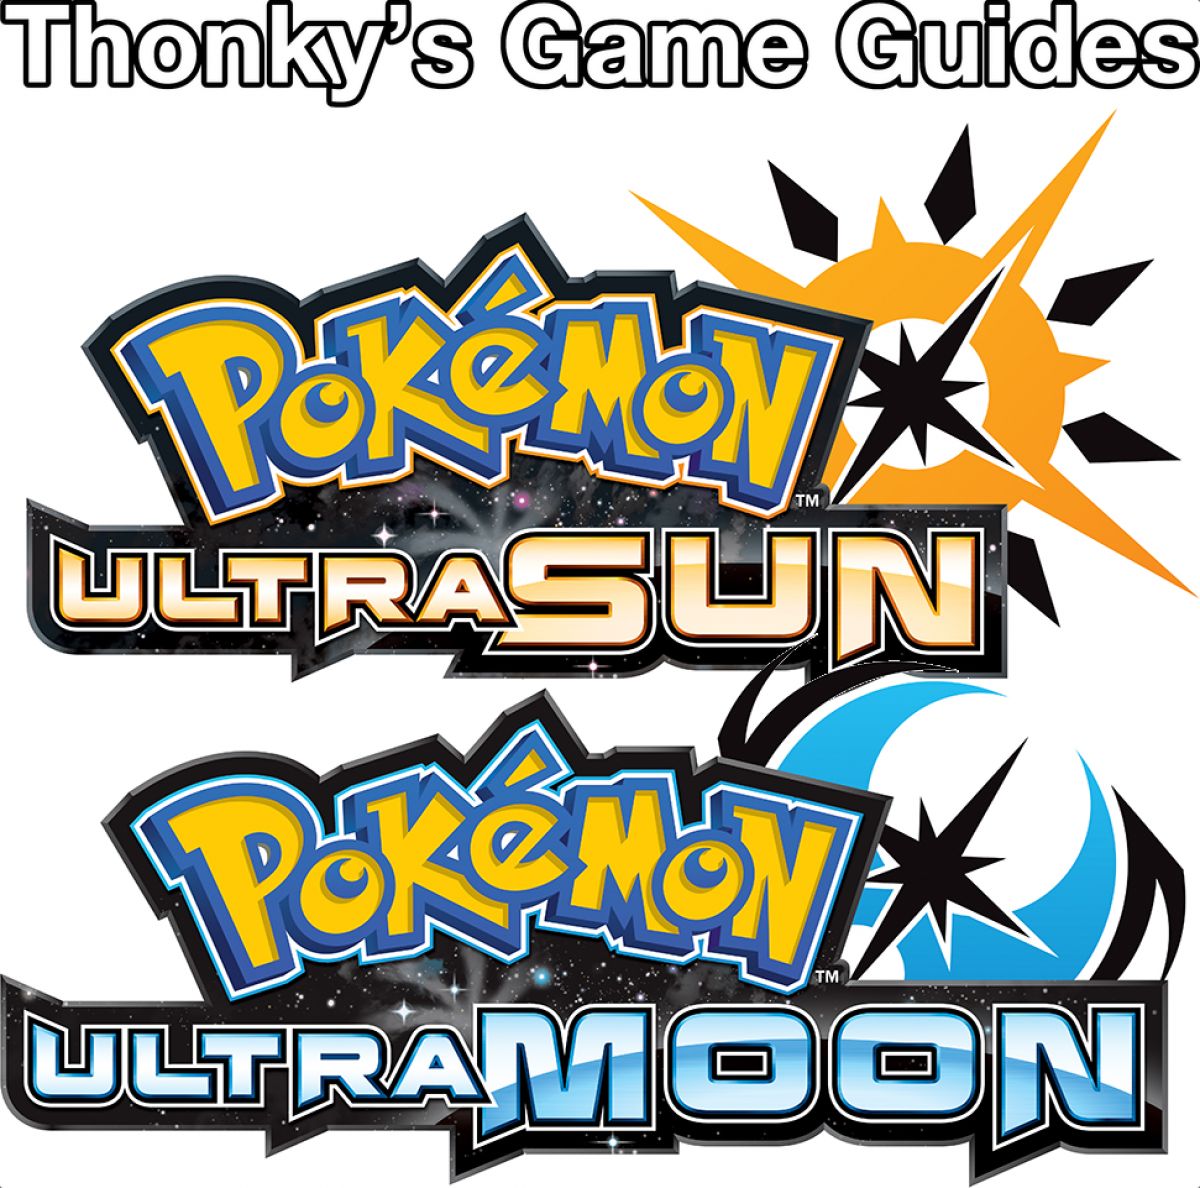 15 AWESOME CHEATS For Pokemon Ultra Sun & Ultra Moon 